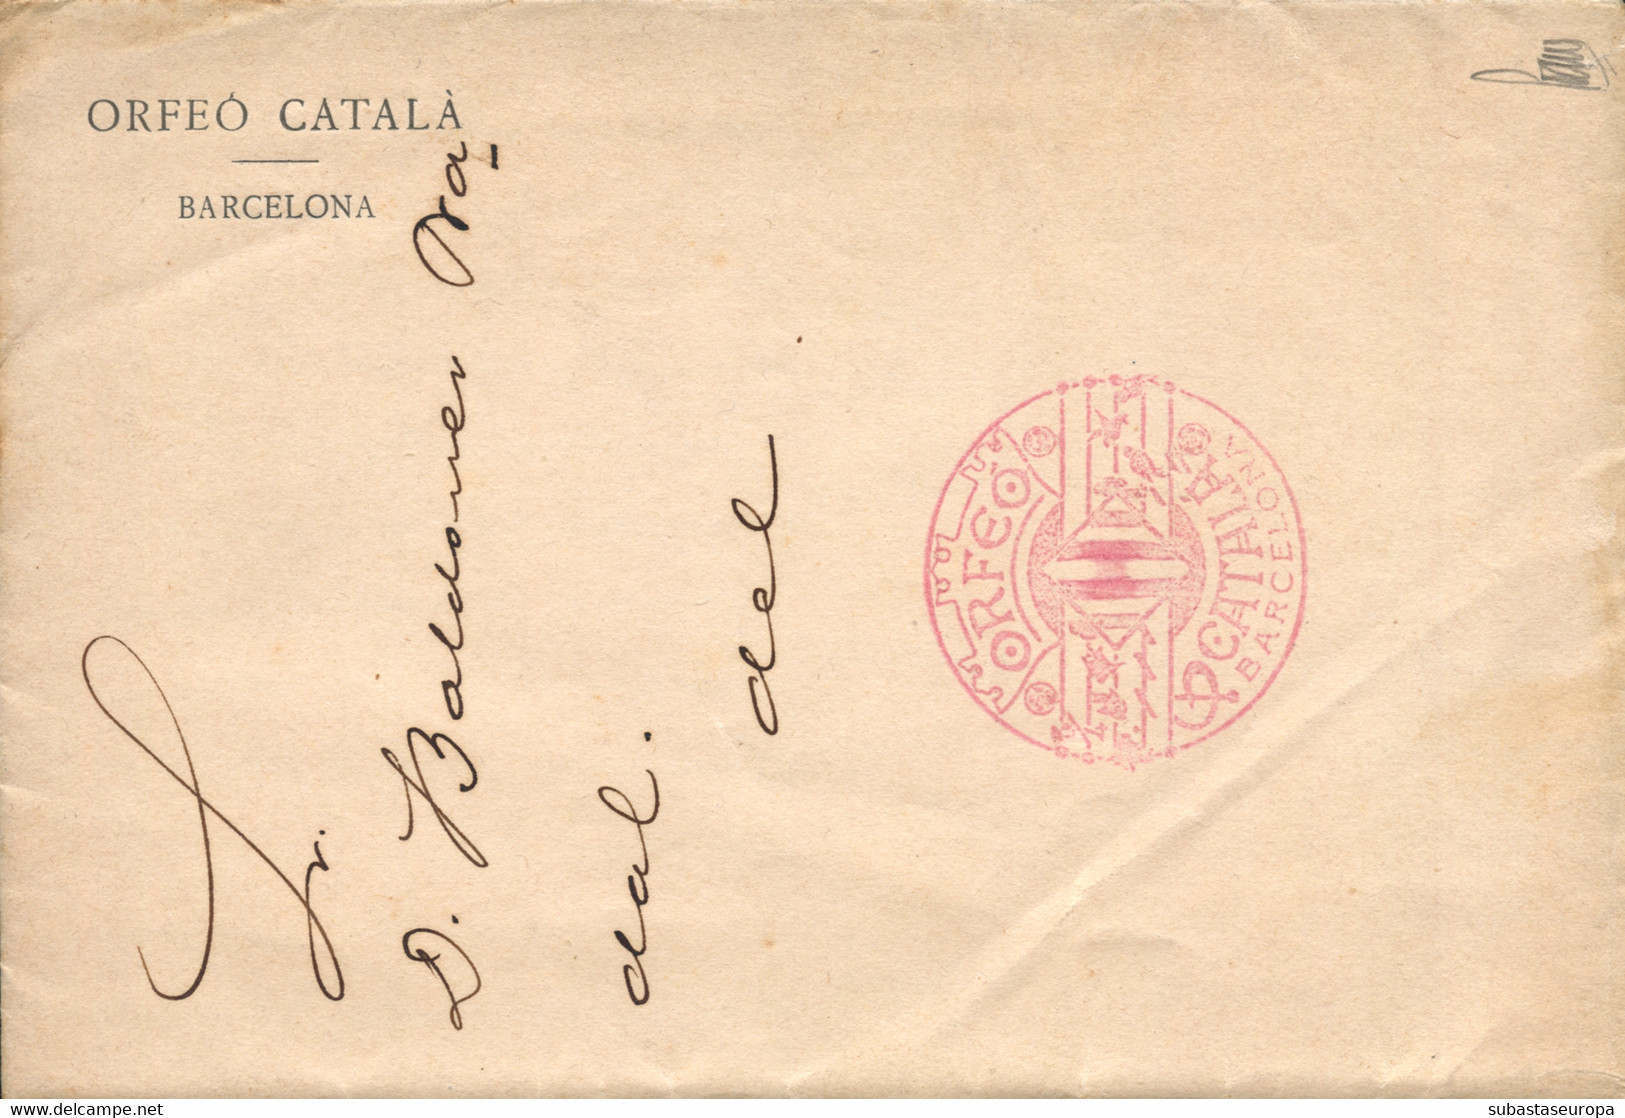 1913 (1 SEP). Carta Circulada Interior De Barcelona, Con Membrete Impreso "Orfeó Català" Y Franquicia En Rojo "ORFEO/CAT - Franchise Postale